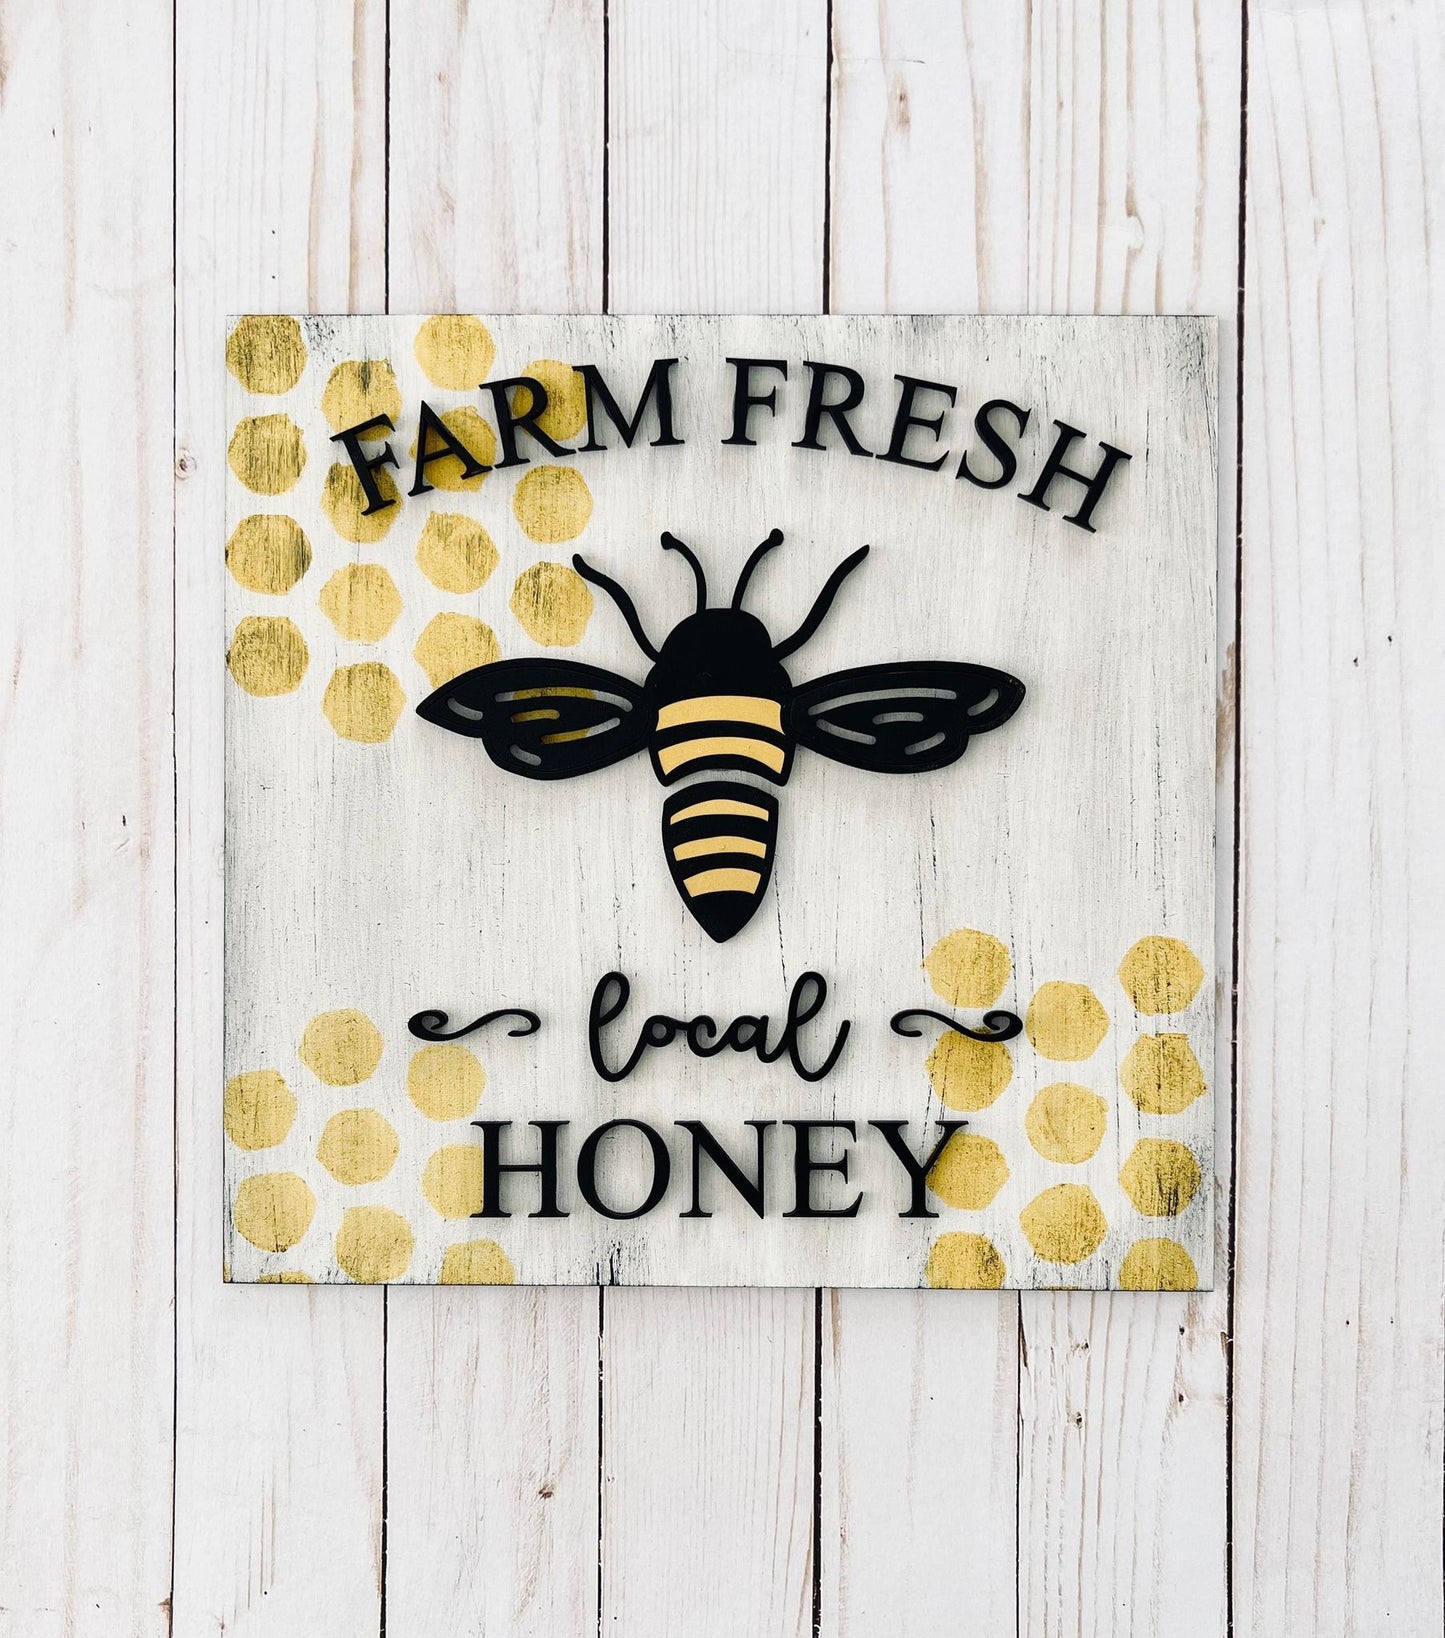 Farm Fresh Honey DIY Paint Kit - Party in a box!